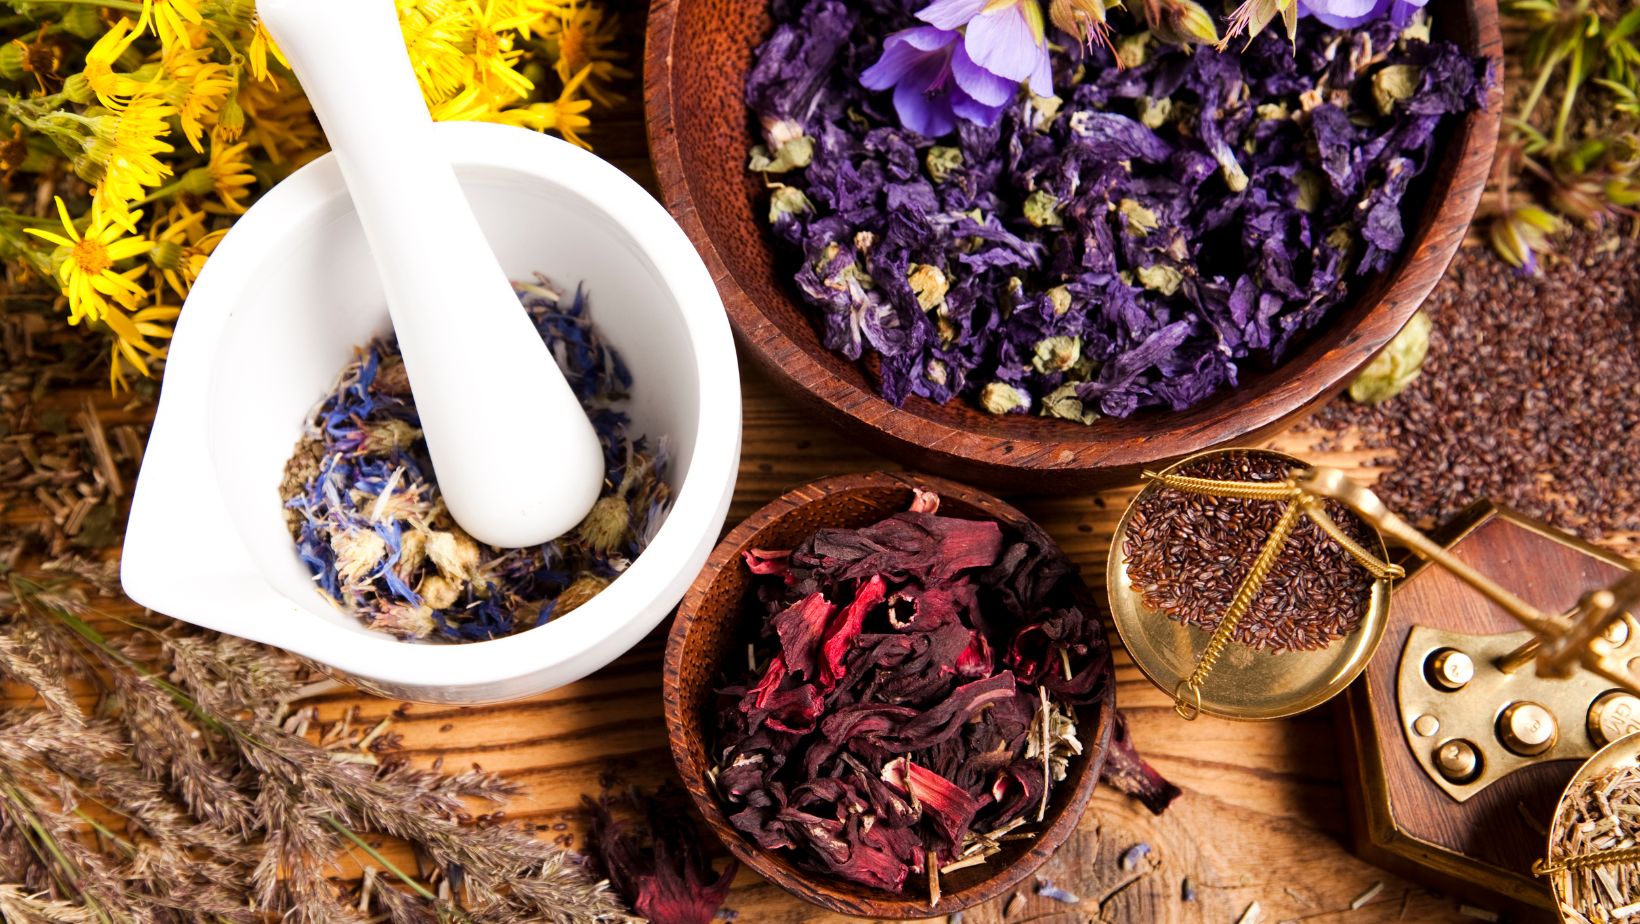 gentle healing arts: acupuncture and herbal medicine